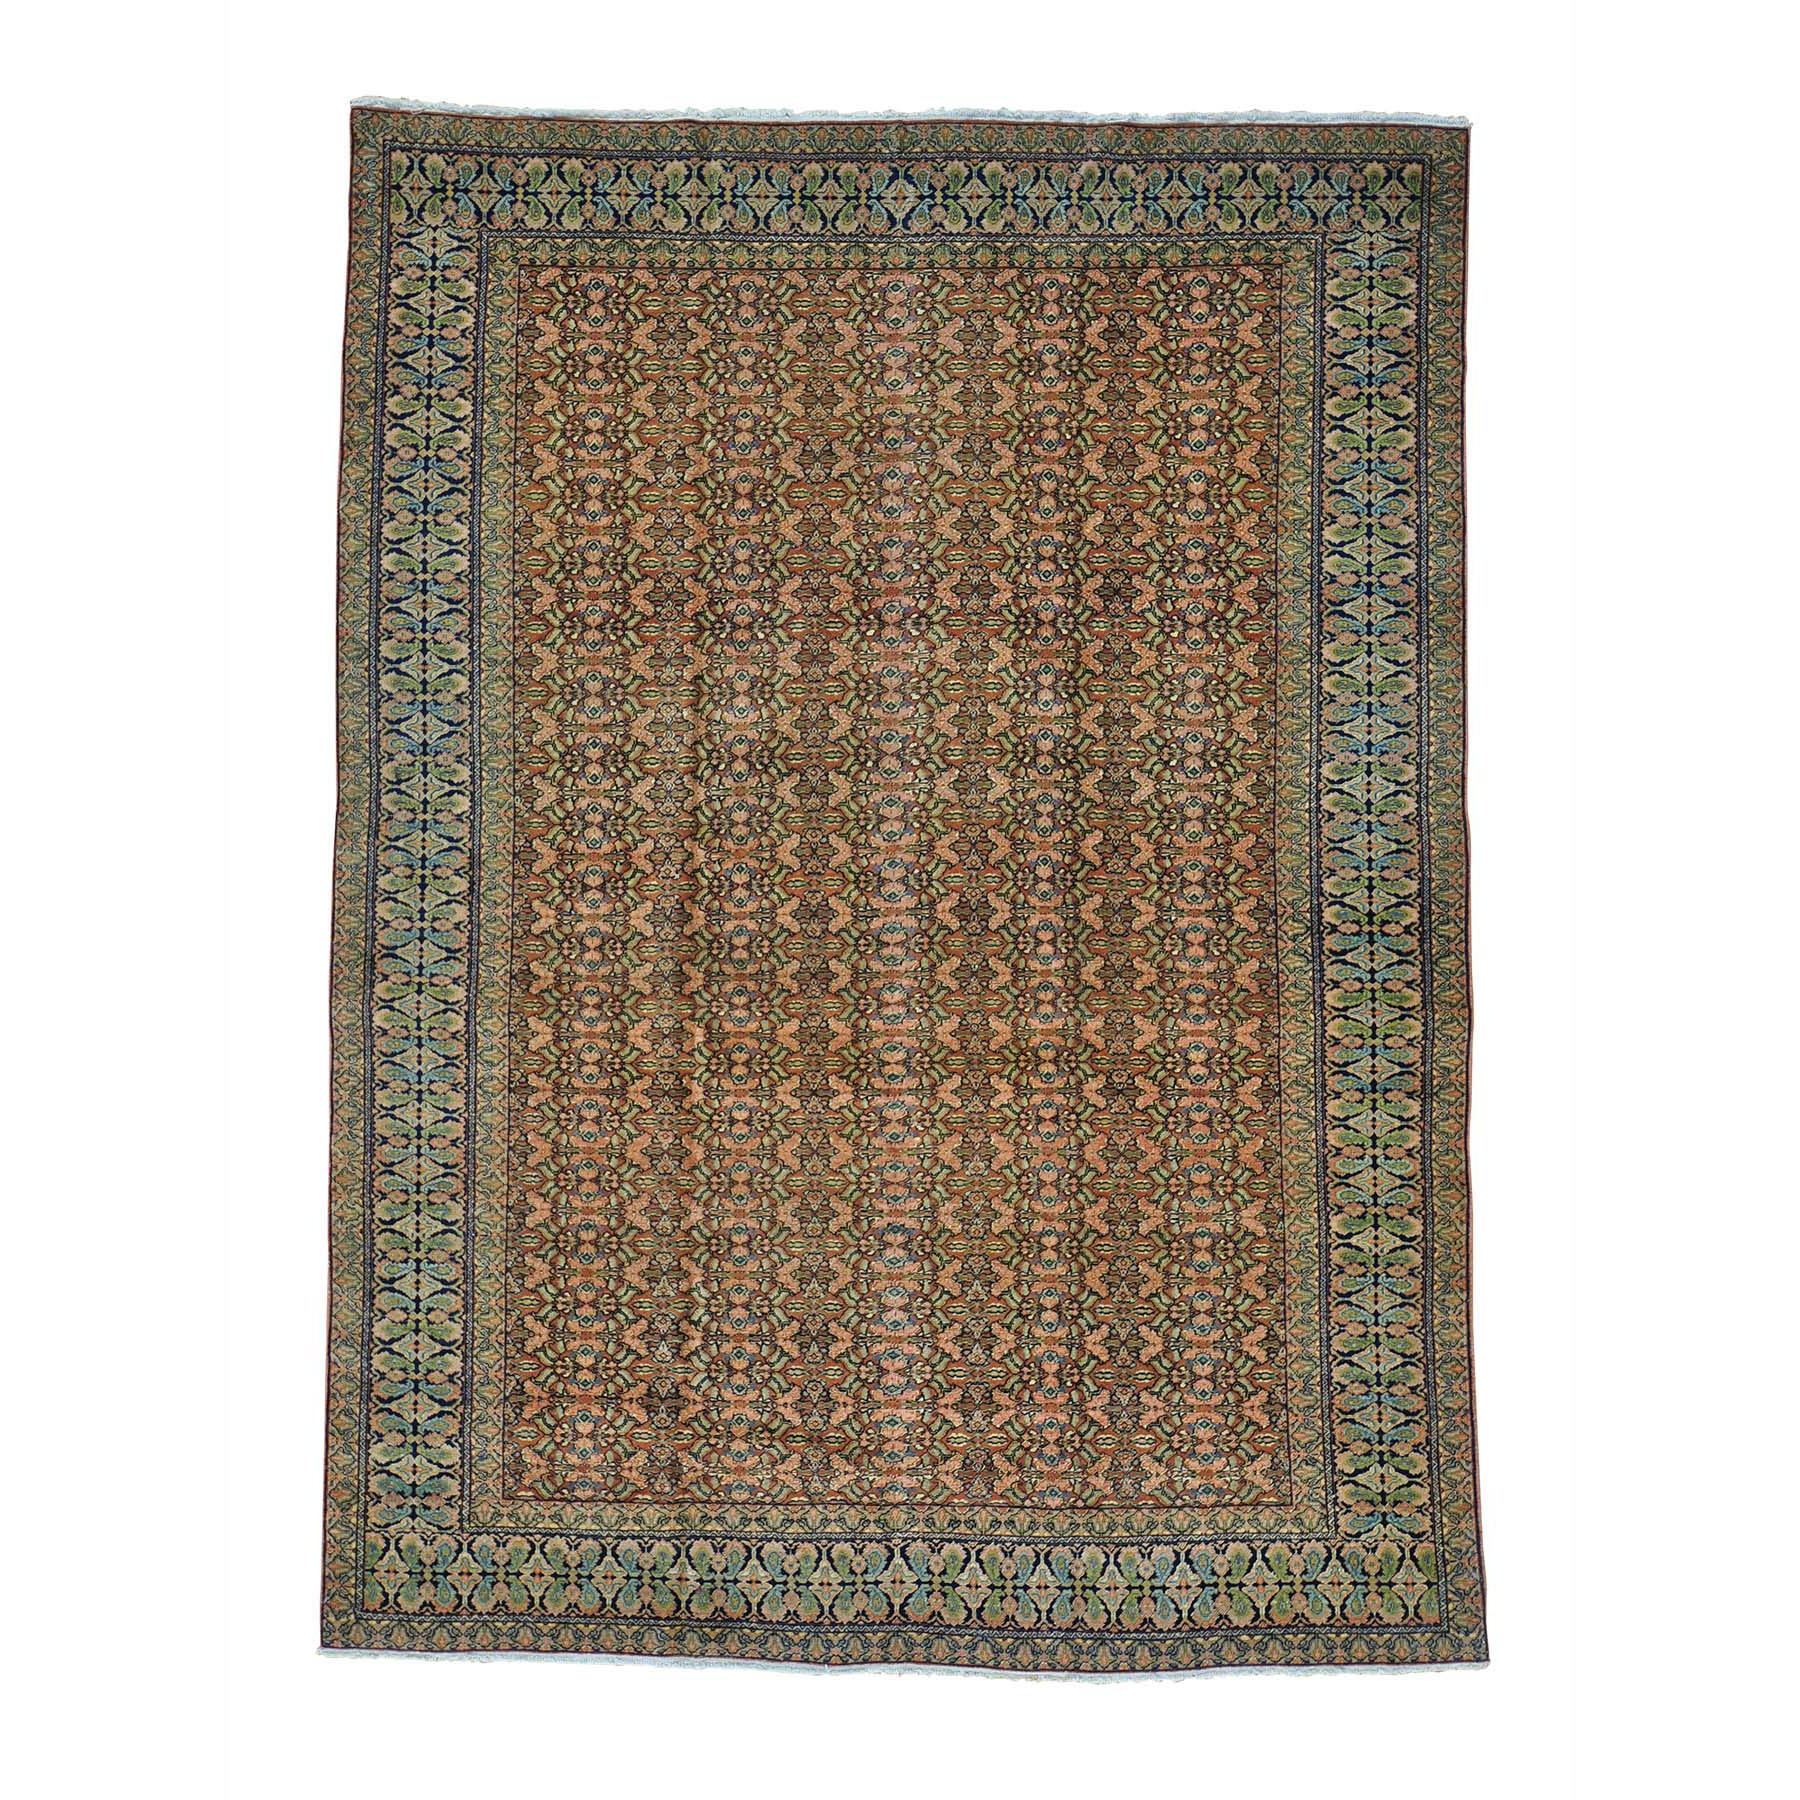 7'2"x9'10" Antique Persian Tabriz Full Pile Hand Woven Oriental Rug 